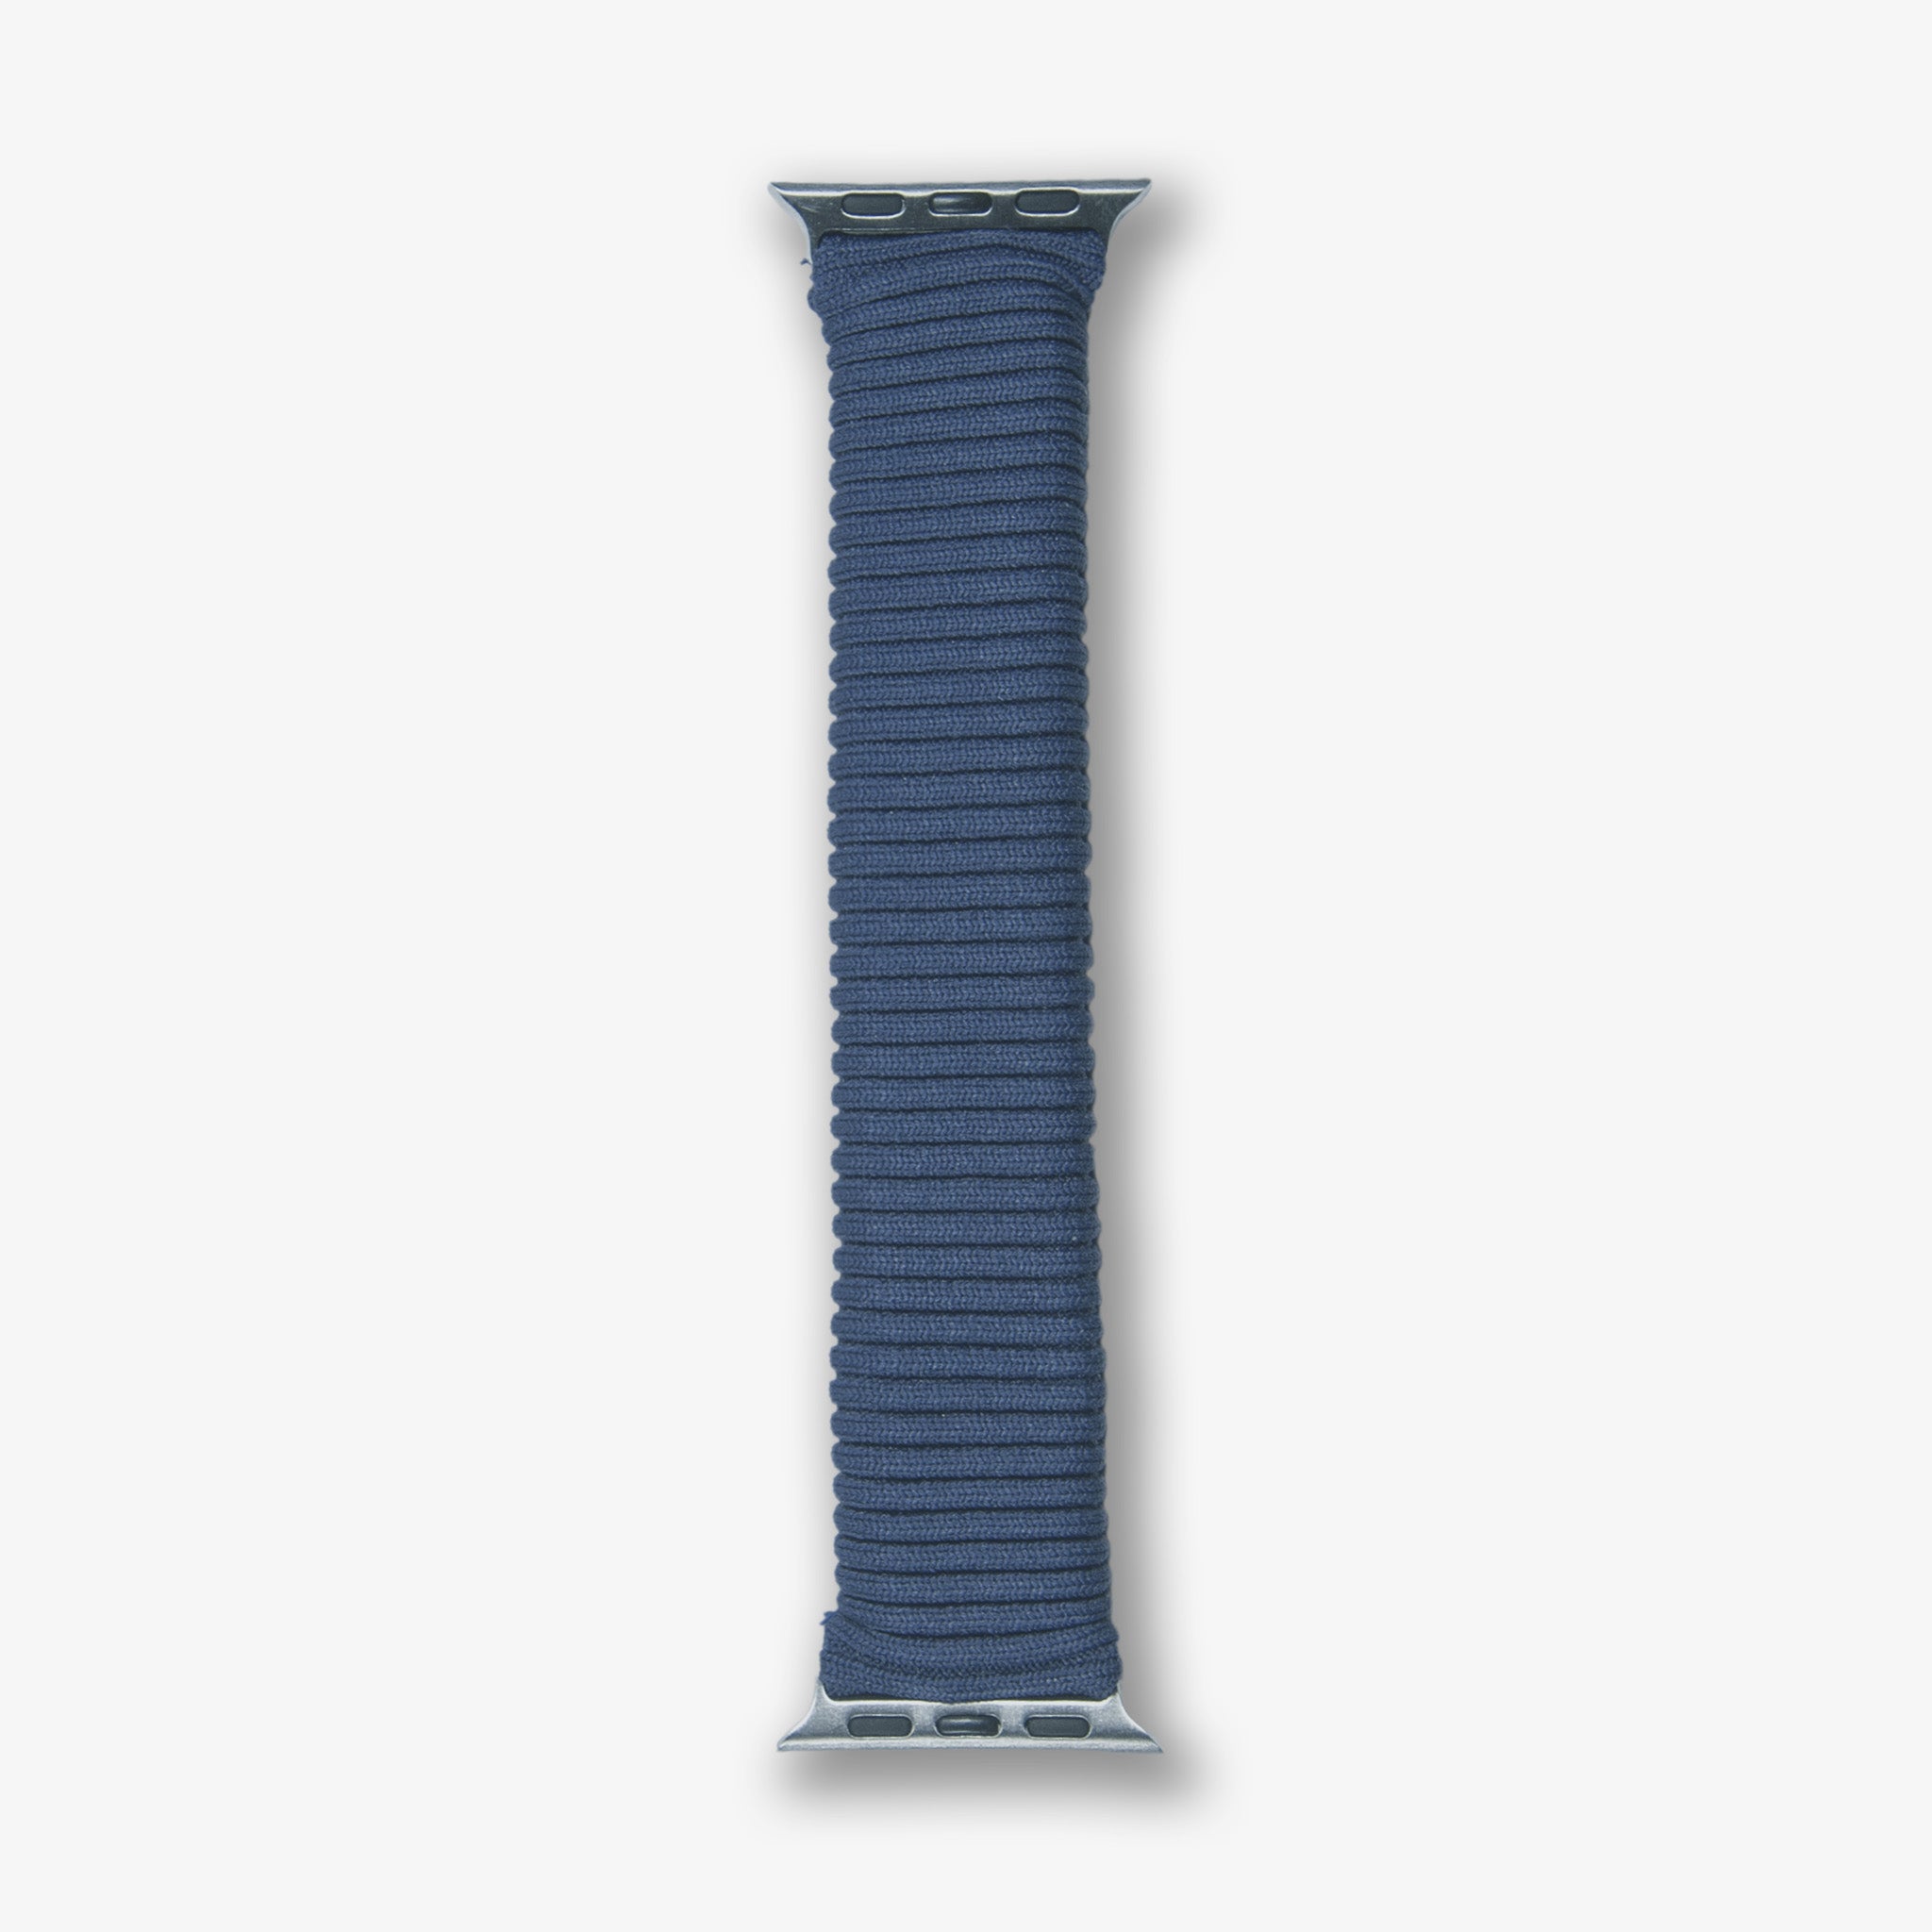 Knit Apple Watch Band - Indigo